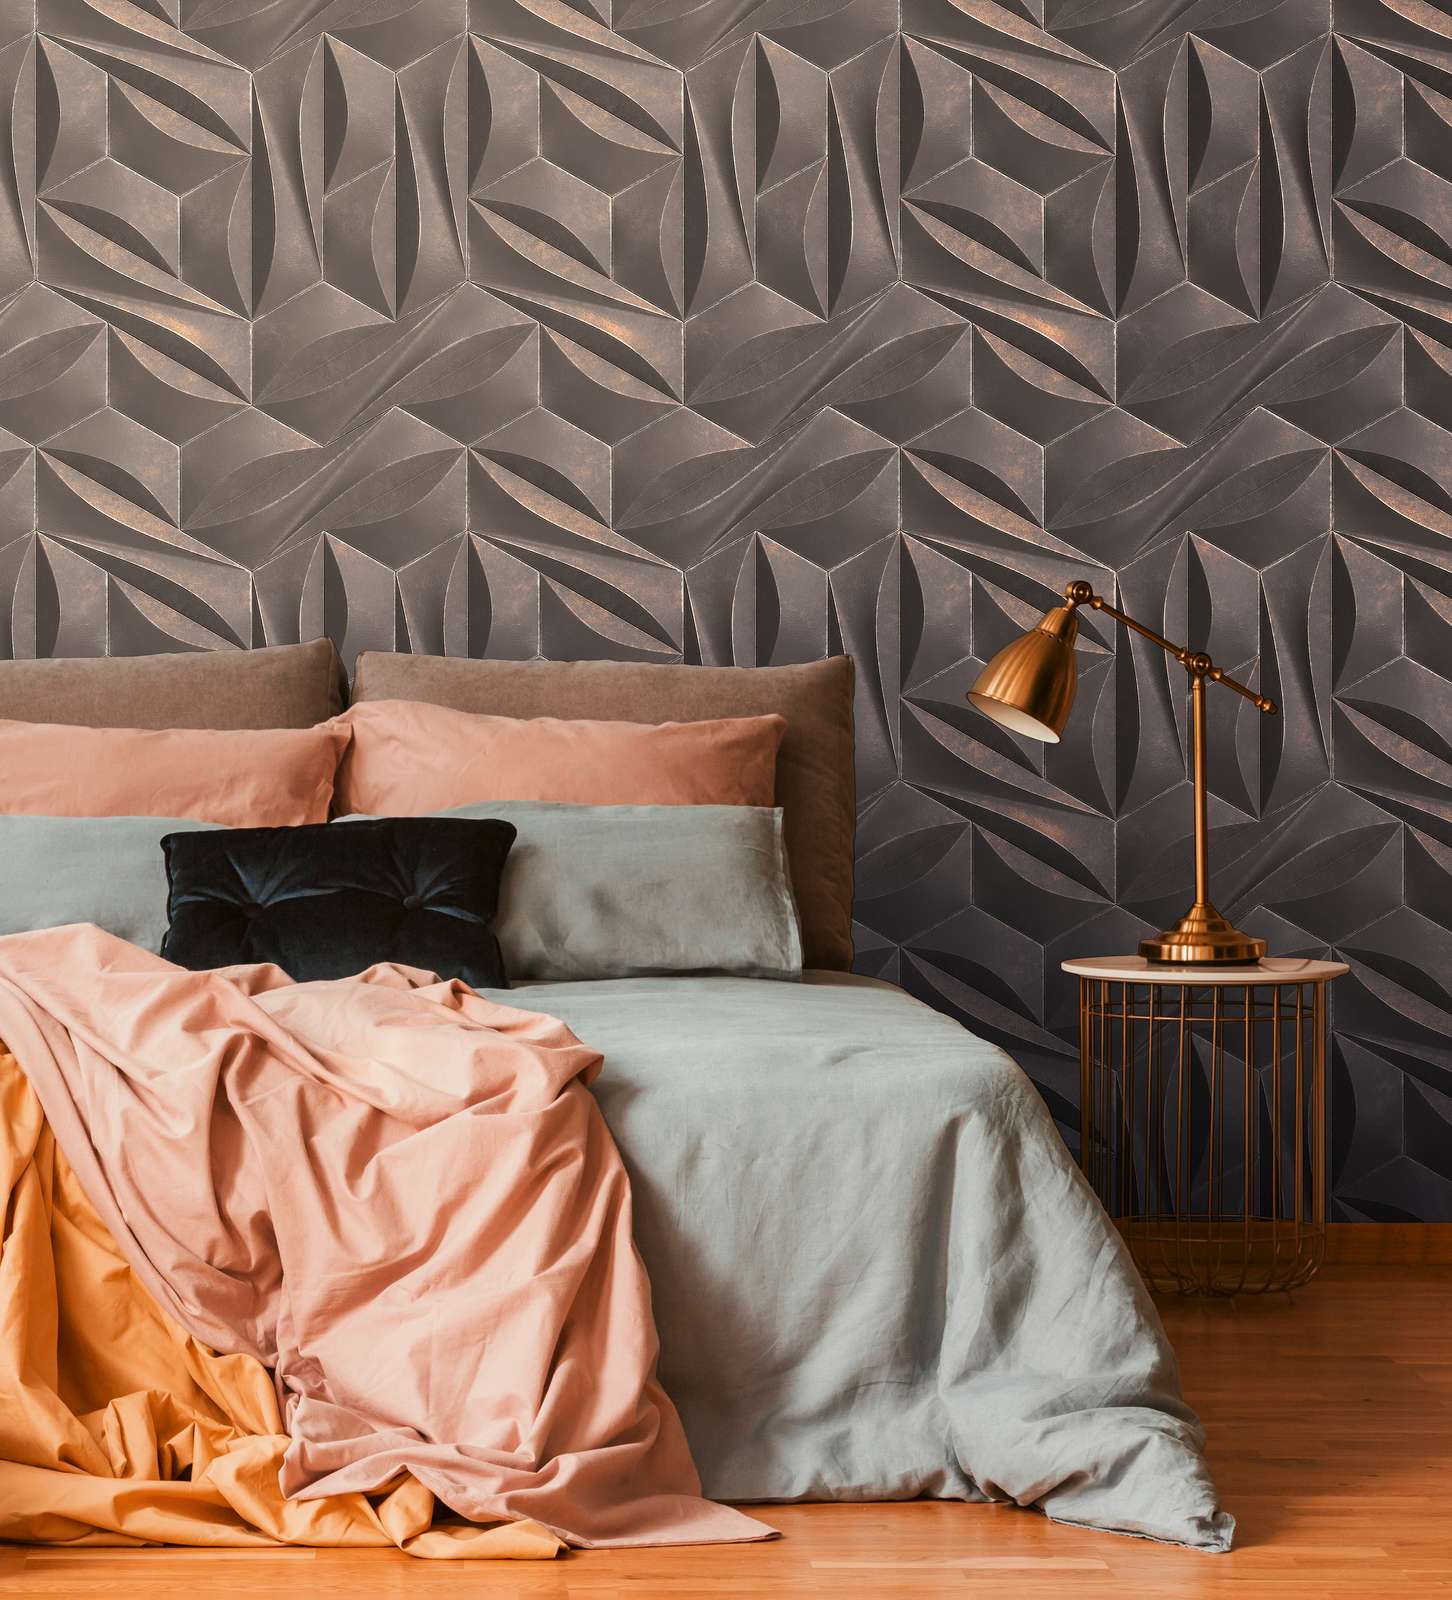             Non-woven wallpaper with metallic 3D look - grey, bronze
        